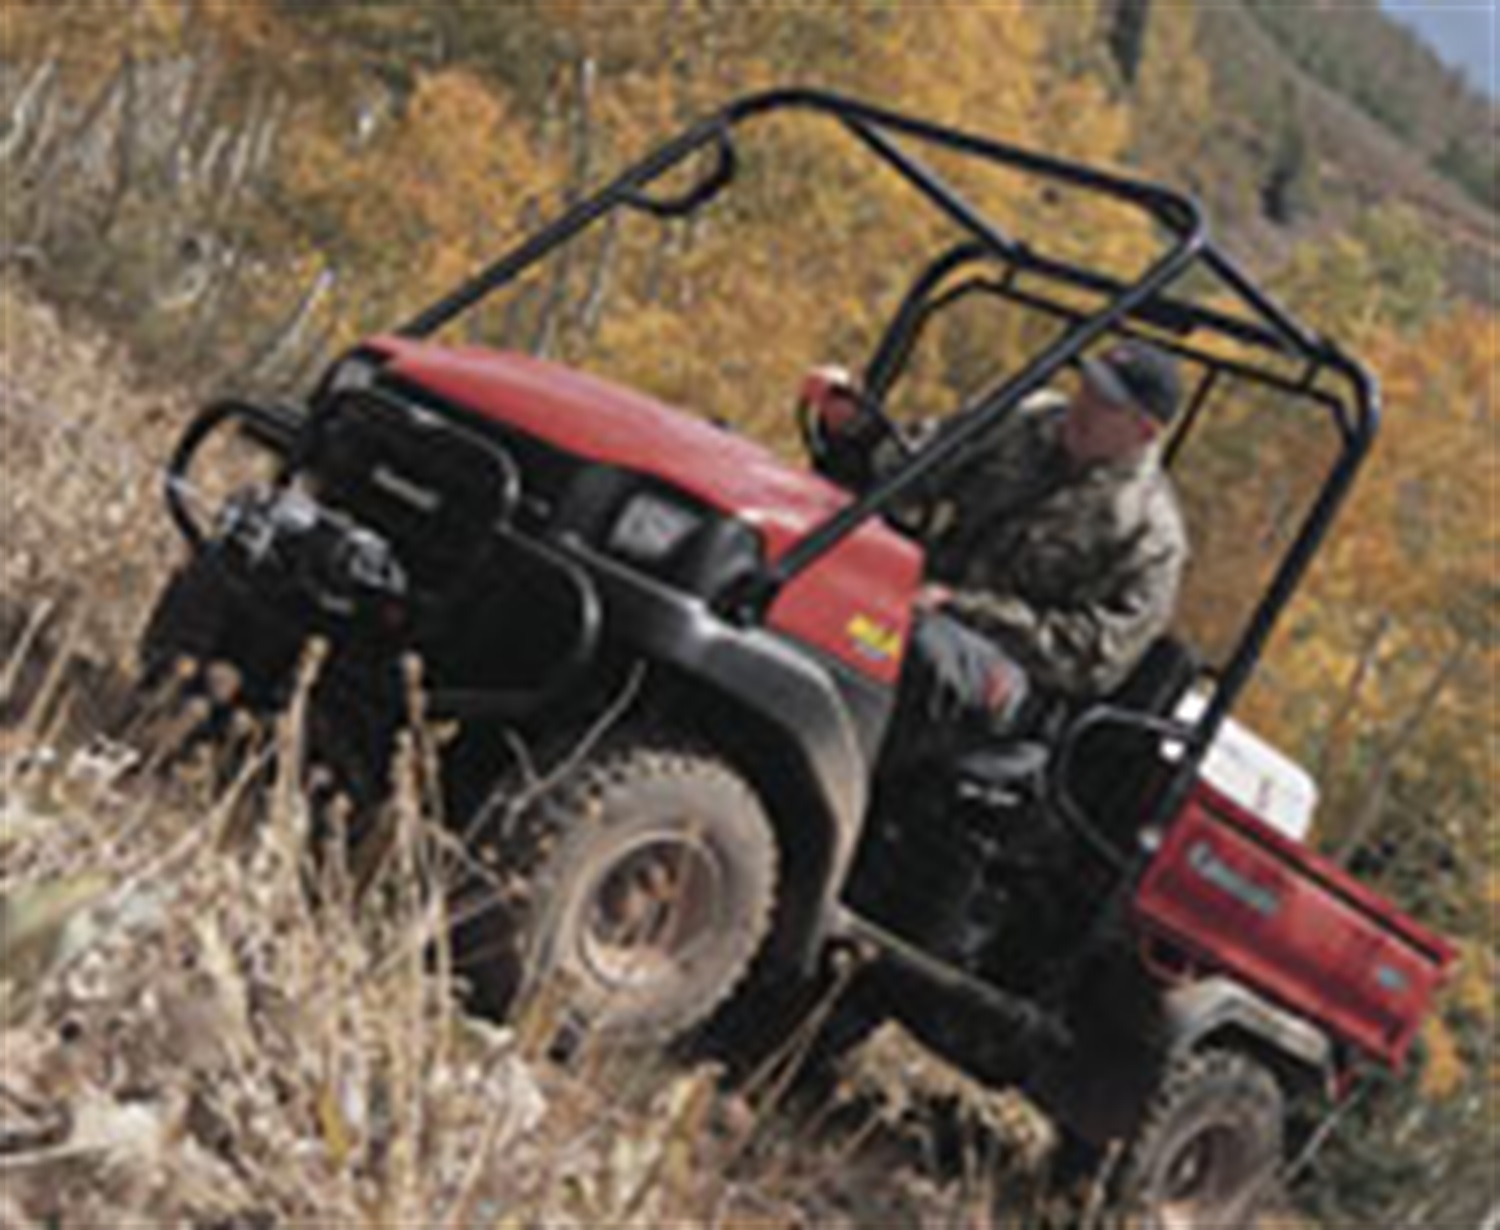 Warn Warn 74186 ATV Winch Mounting System Fits KAF620 Mule 3000 KAF620 Mule 3010 4x4